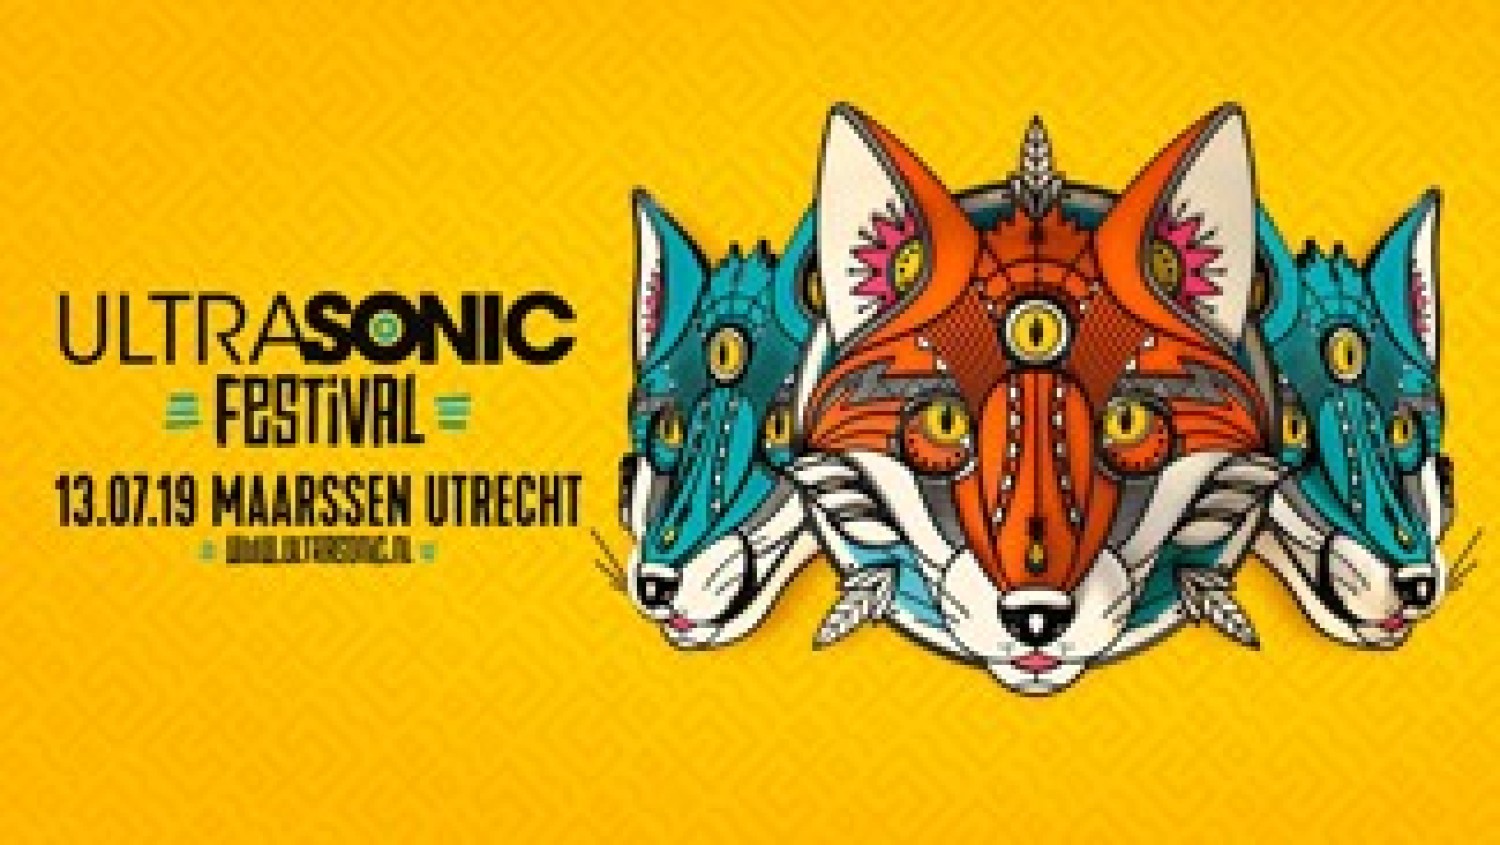 Party nieuws: Ultrasonic Festival 2019 maakt indeling stages bekend!